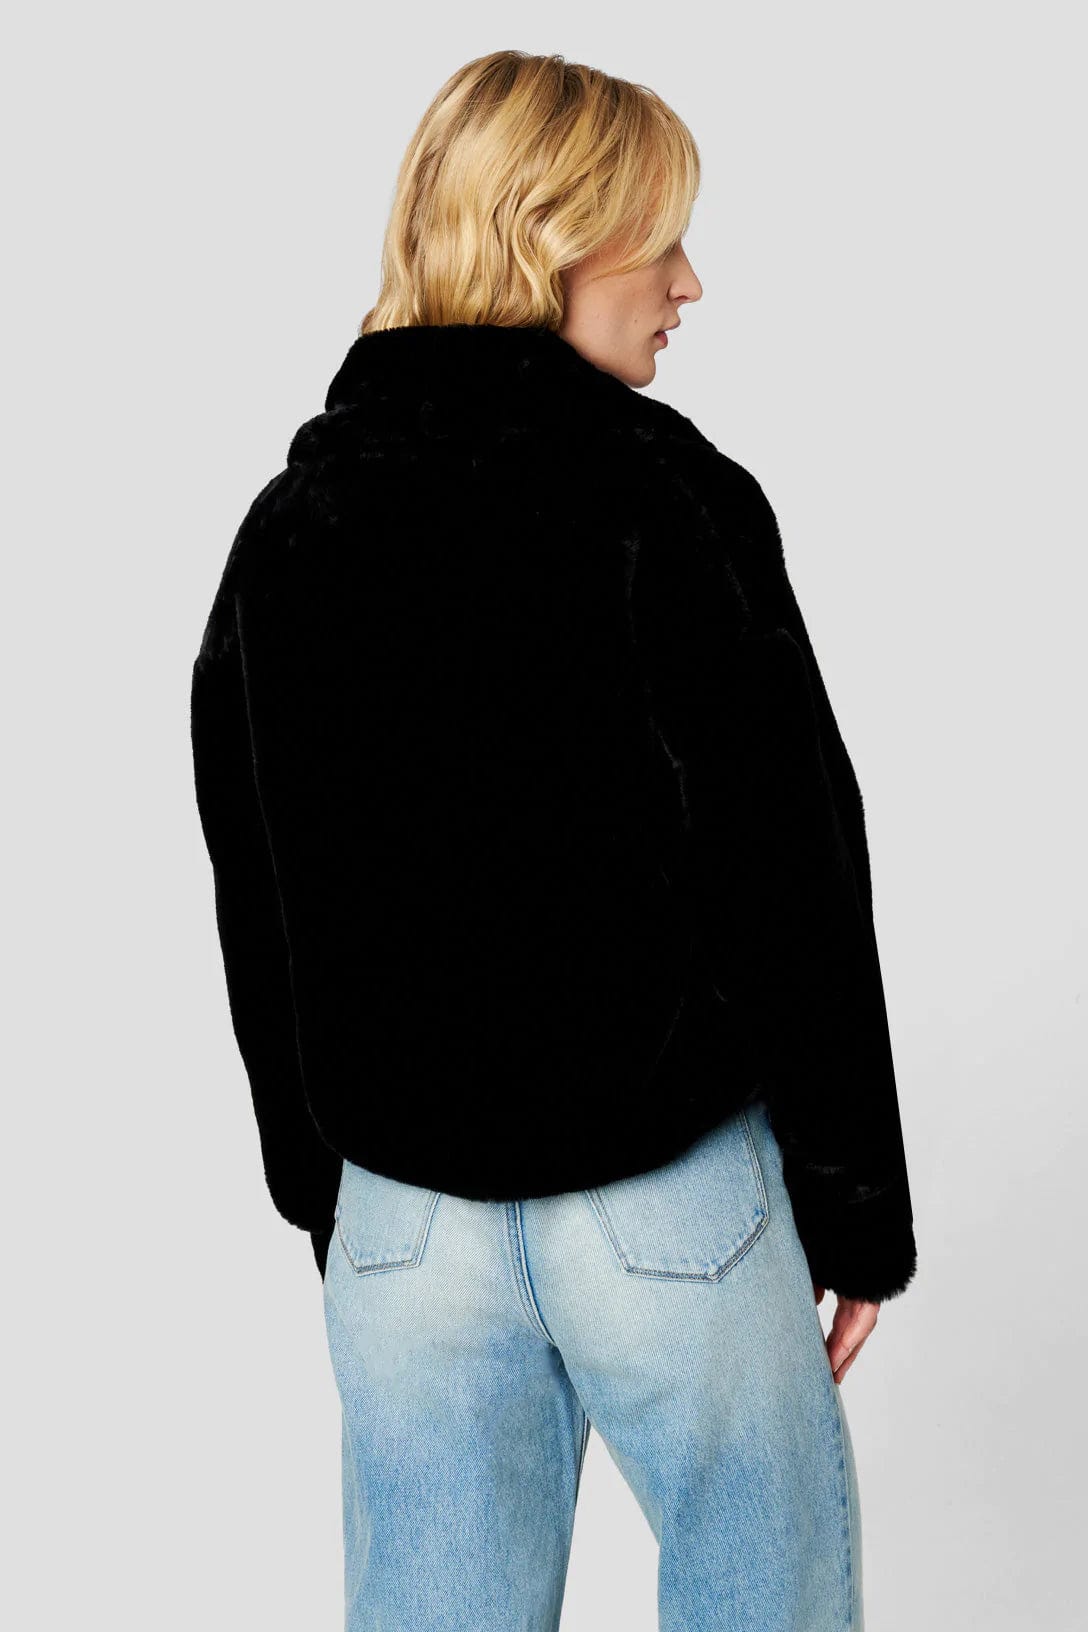 Double Date Faux Fur Jacket Black, Jacket by Blank NYC | LIT Boutique